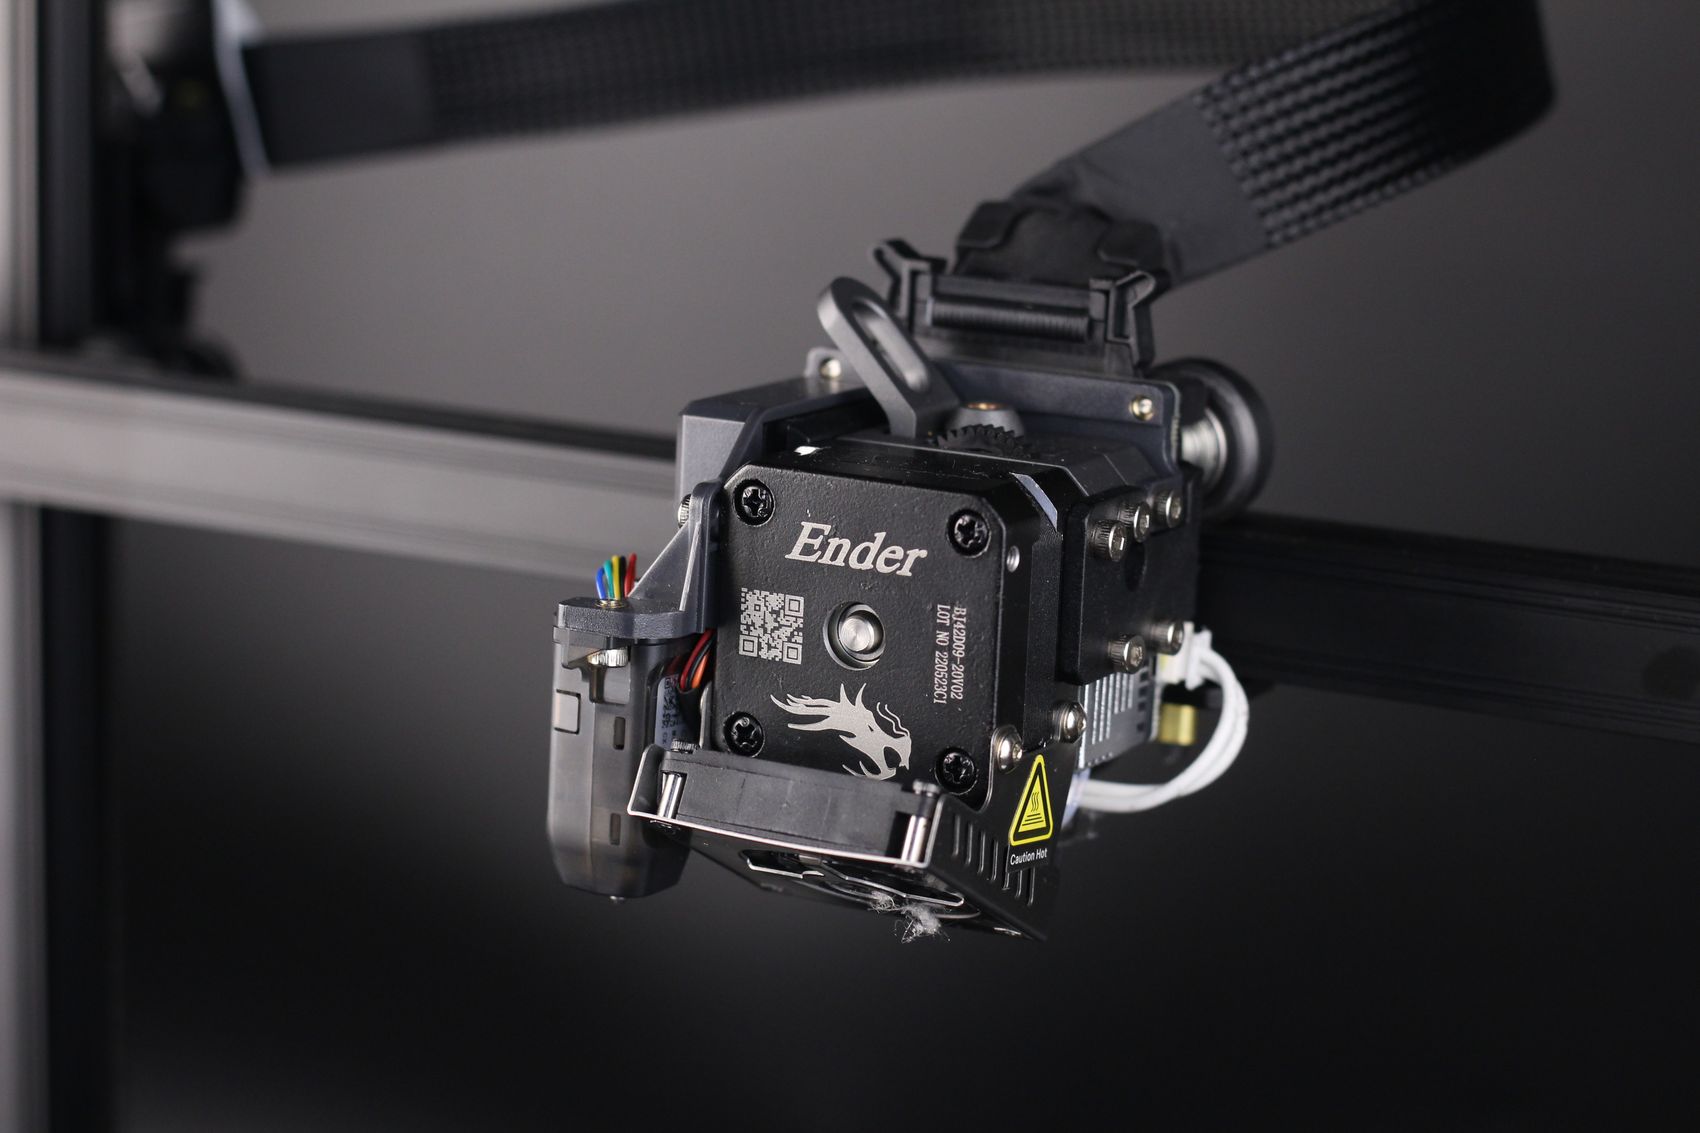 Ender 3 S1 Plus Sprite | Creality Ender 3 S1 Plus Review